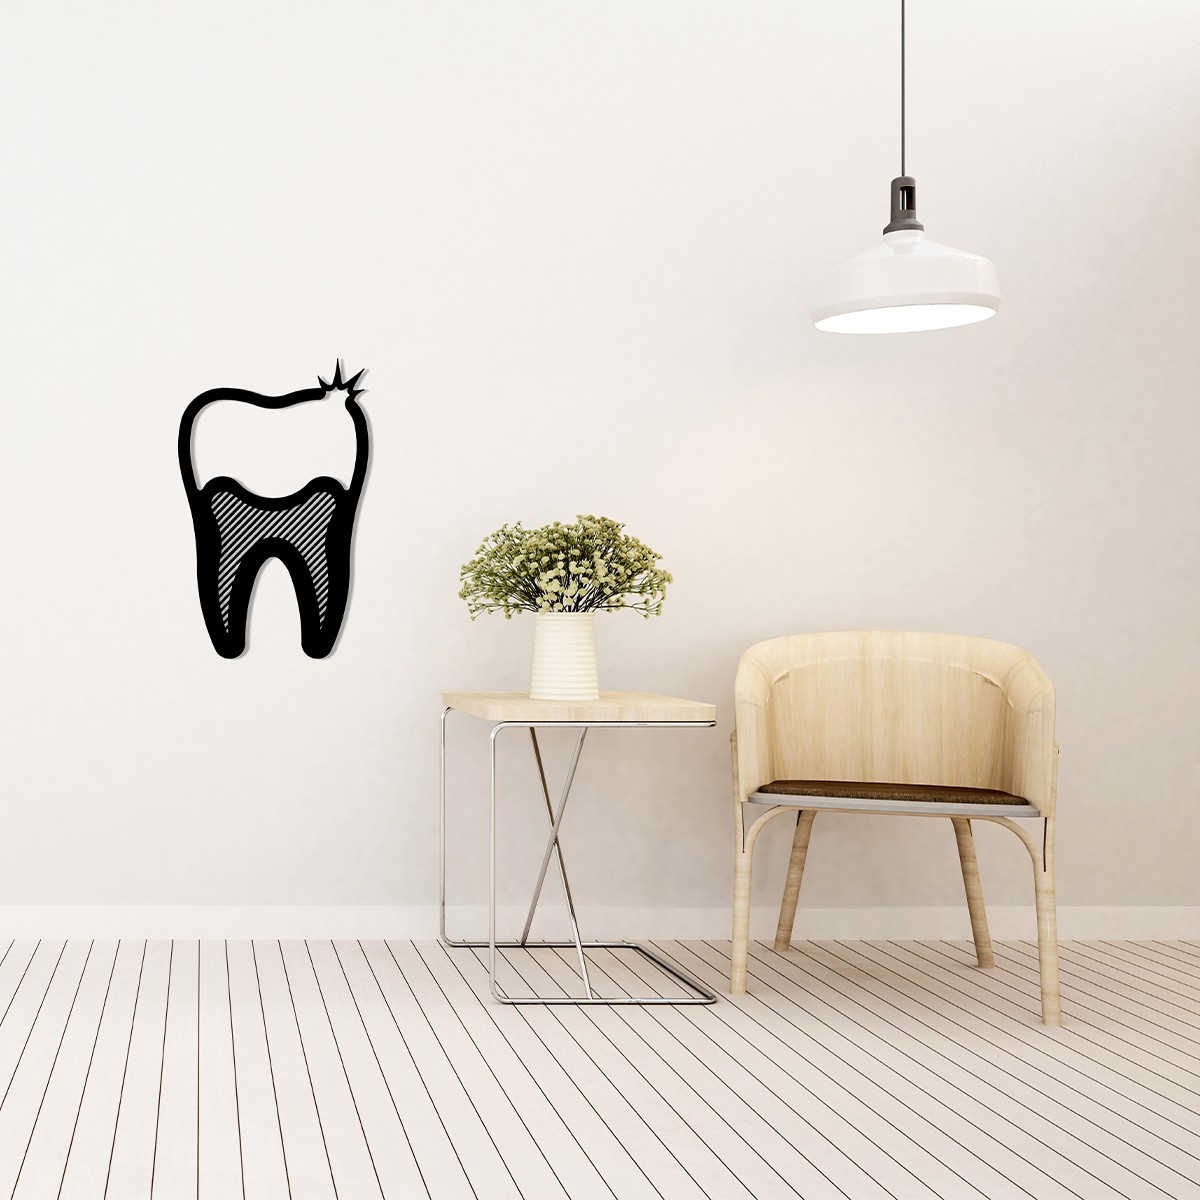  Metal Wall Art Stylized Teeth Design-B